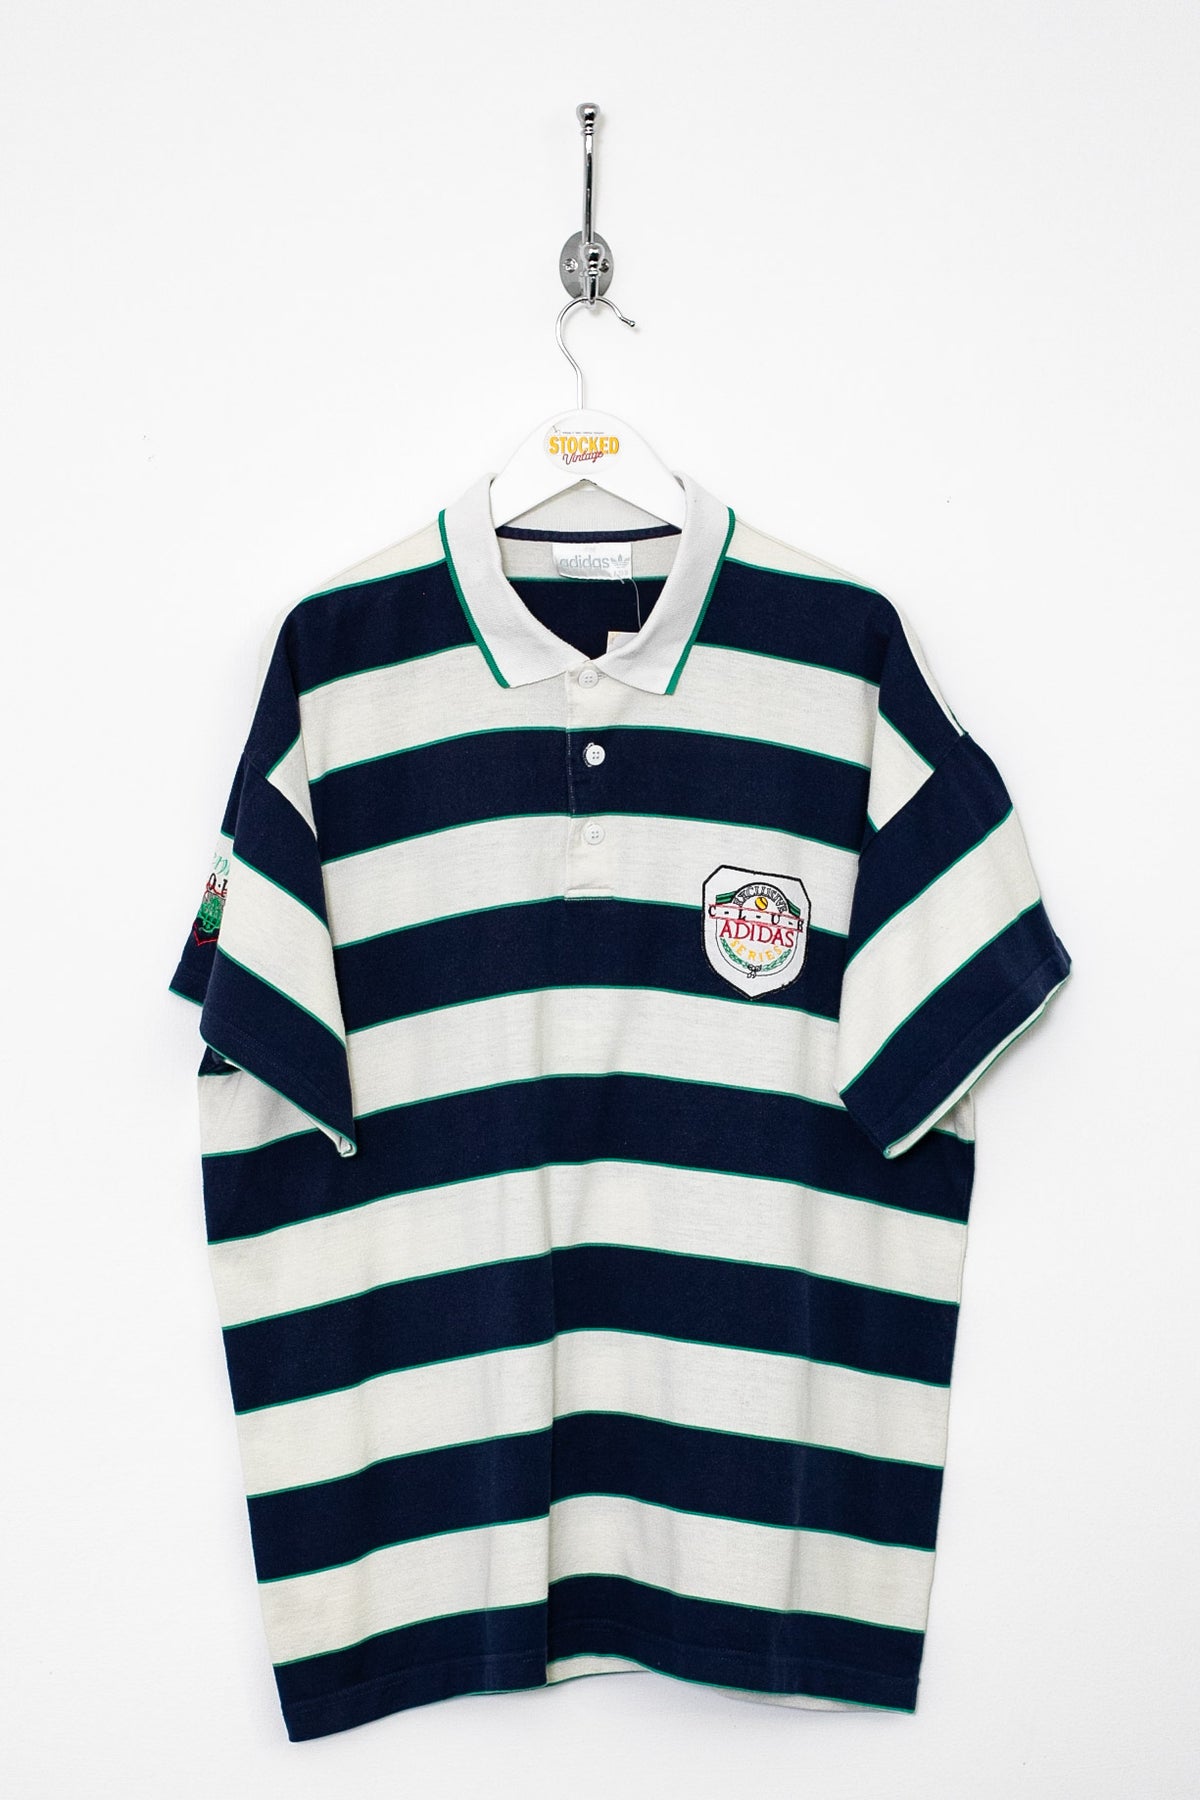 90s Adidas Polo Shirt (M)